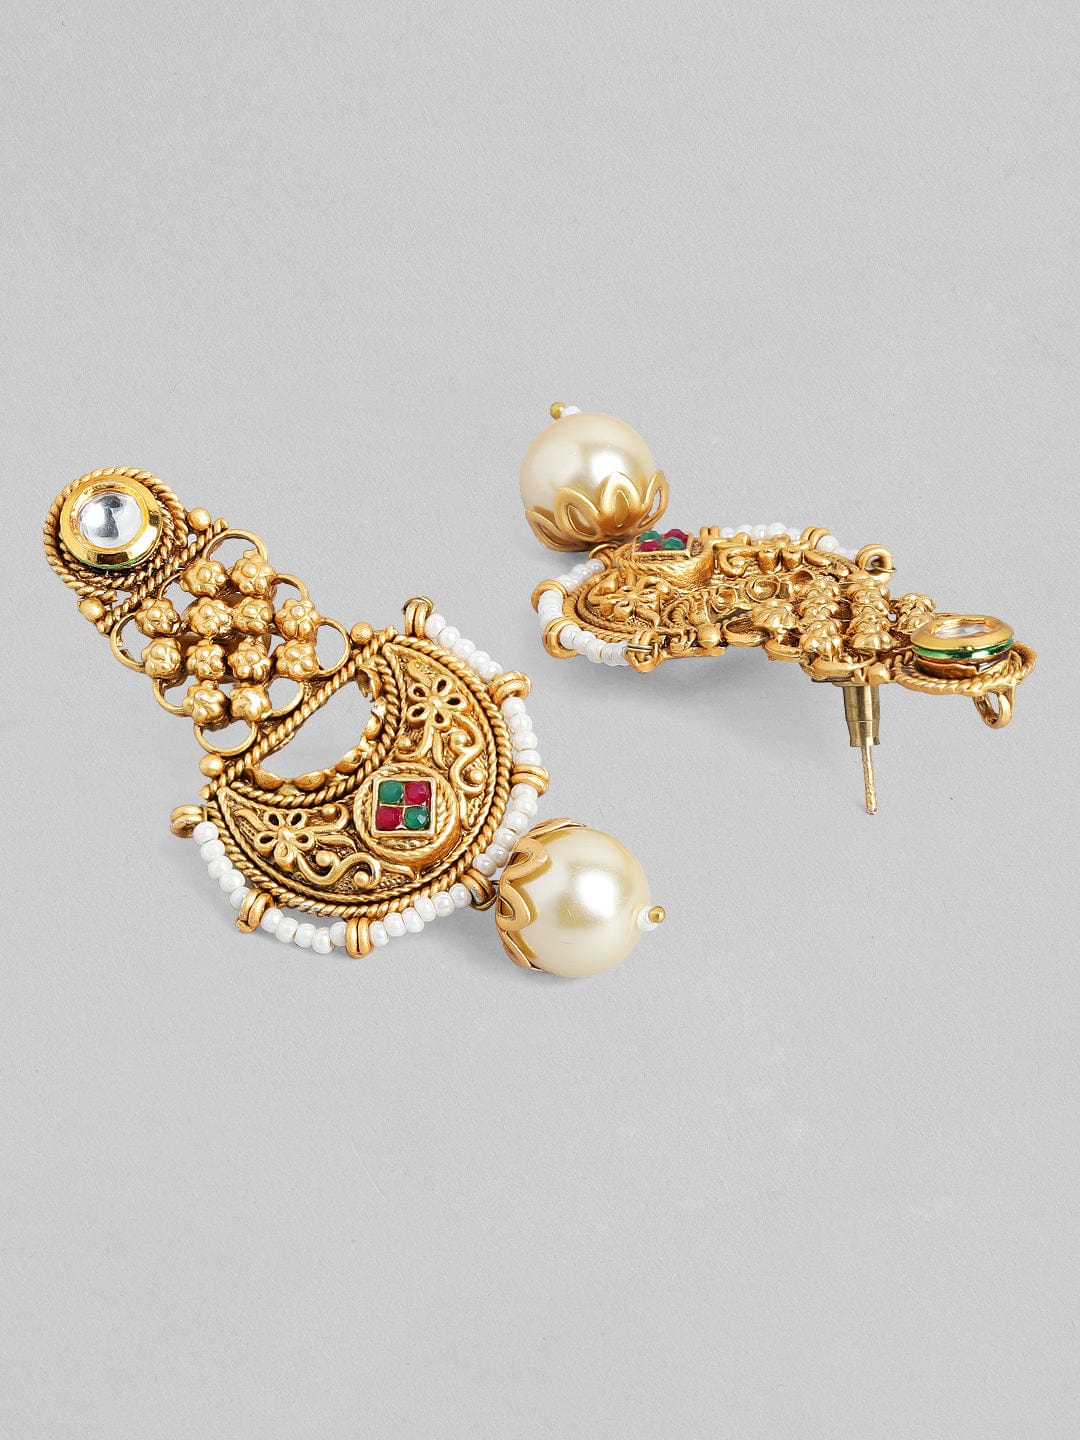 Rubans Gold Plated Heavy Pendant Beige Pearl Necklace Set Necklace Set